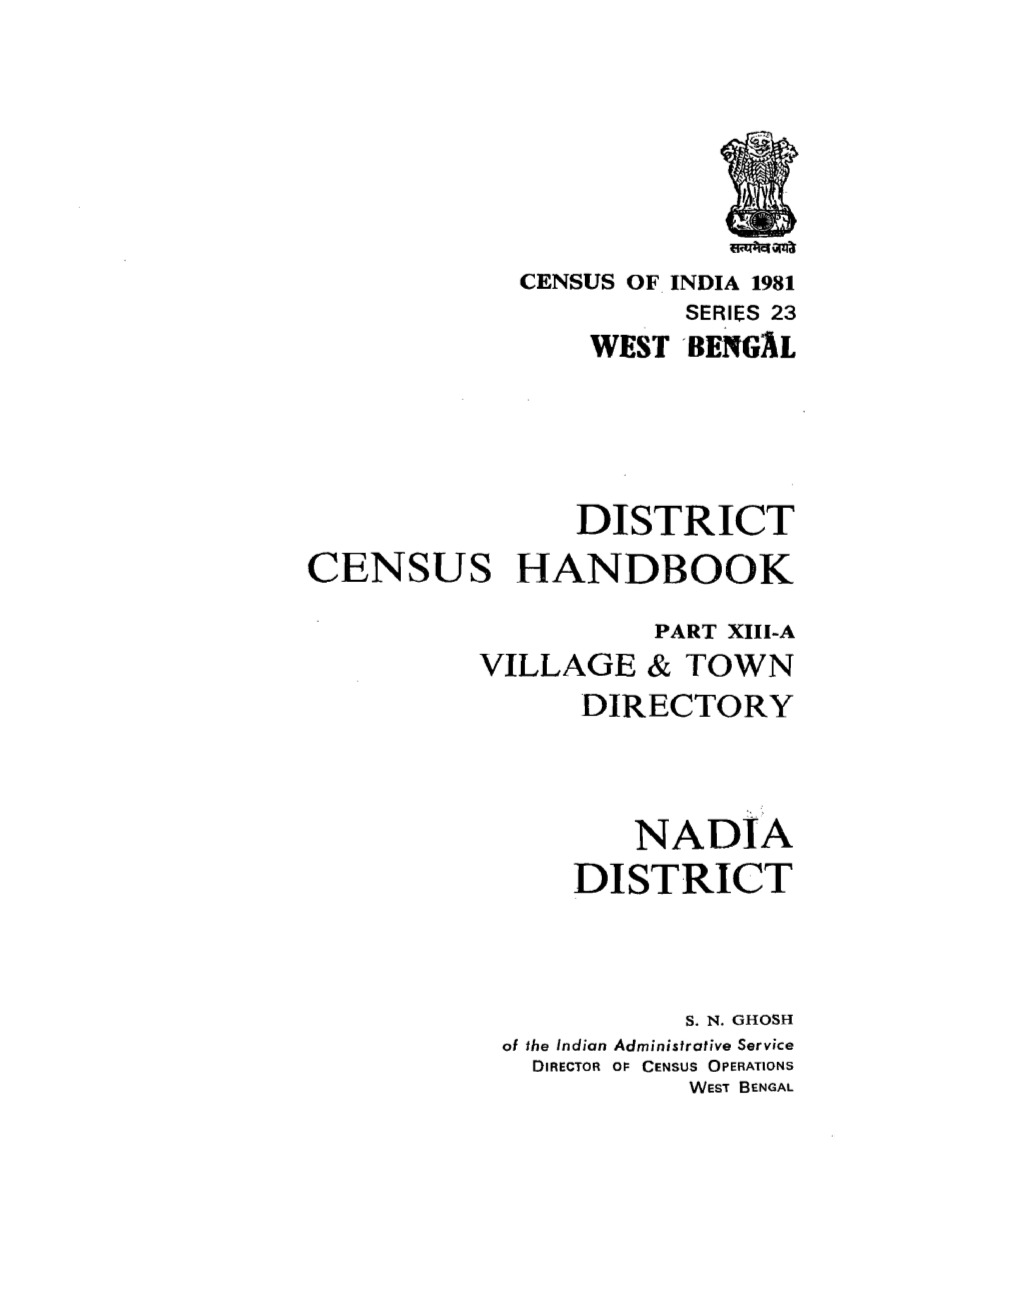 District Census Handbook, Part XIII-B, Puruliya, Series-23, West Bengal